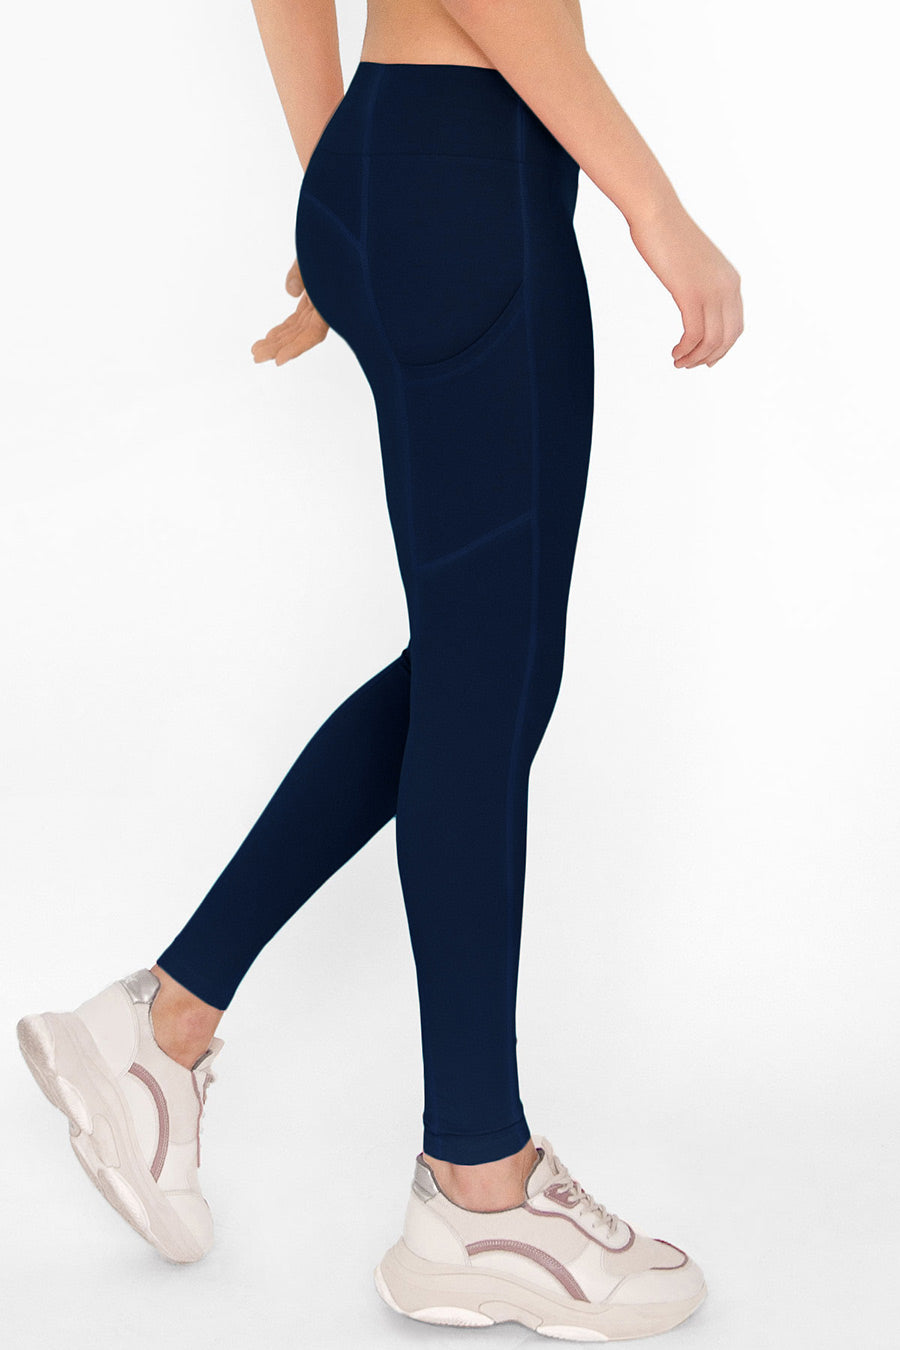 SEMI-ANNUAL SALE! Navy Blue Cassi Side Pockets Workout Leggings Yoga Pants - Women - Pineapple Clothing